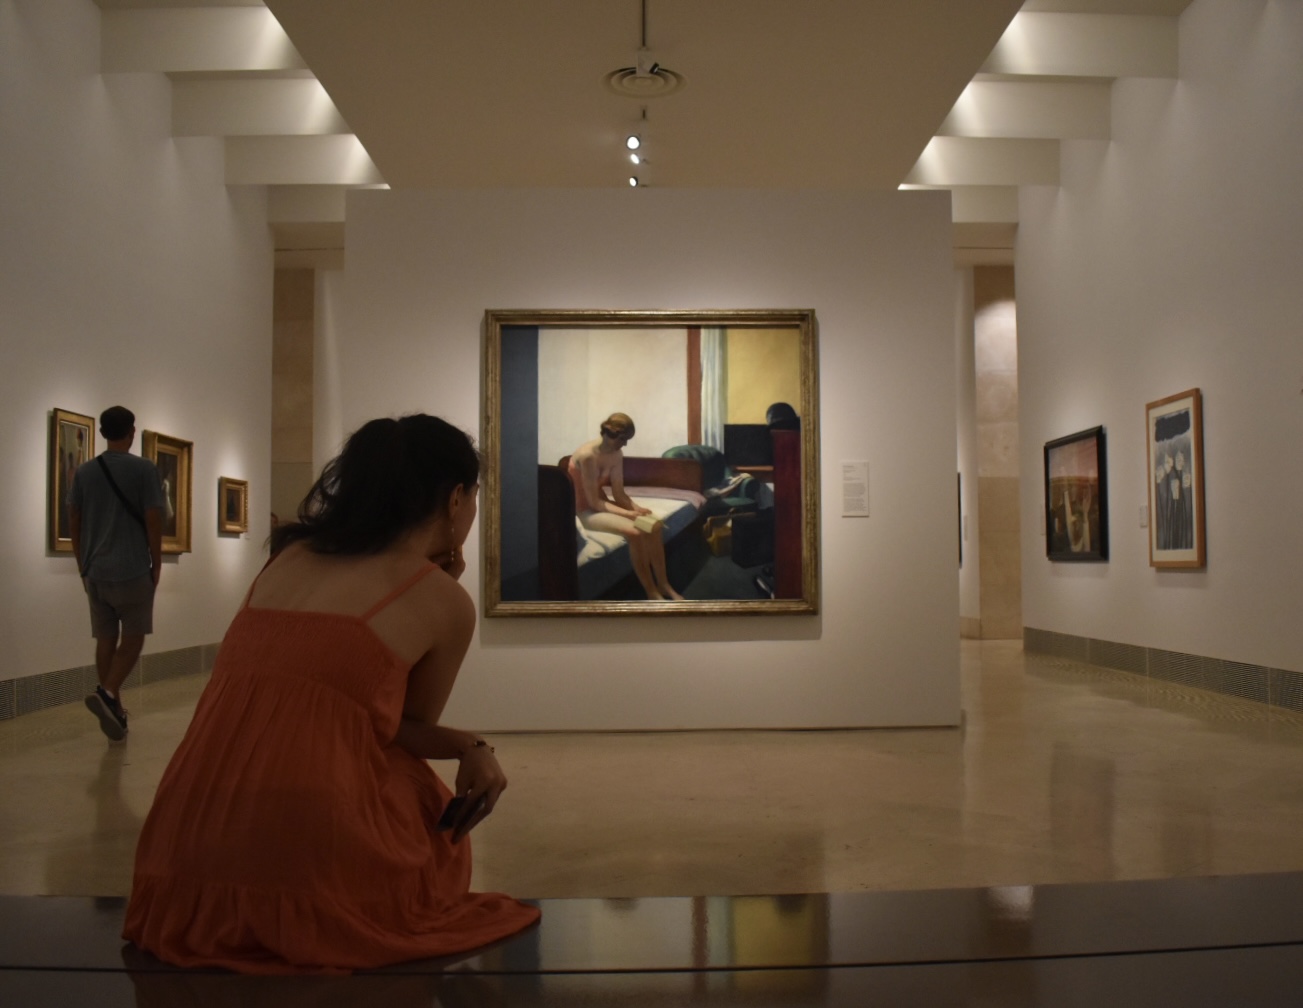 Visita Guiada al Museo Thyssen | Visitas Guiadas por Madrid - The Guides You Need